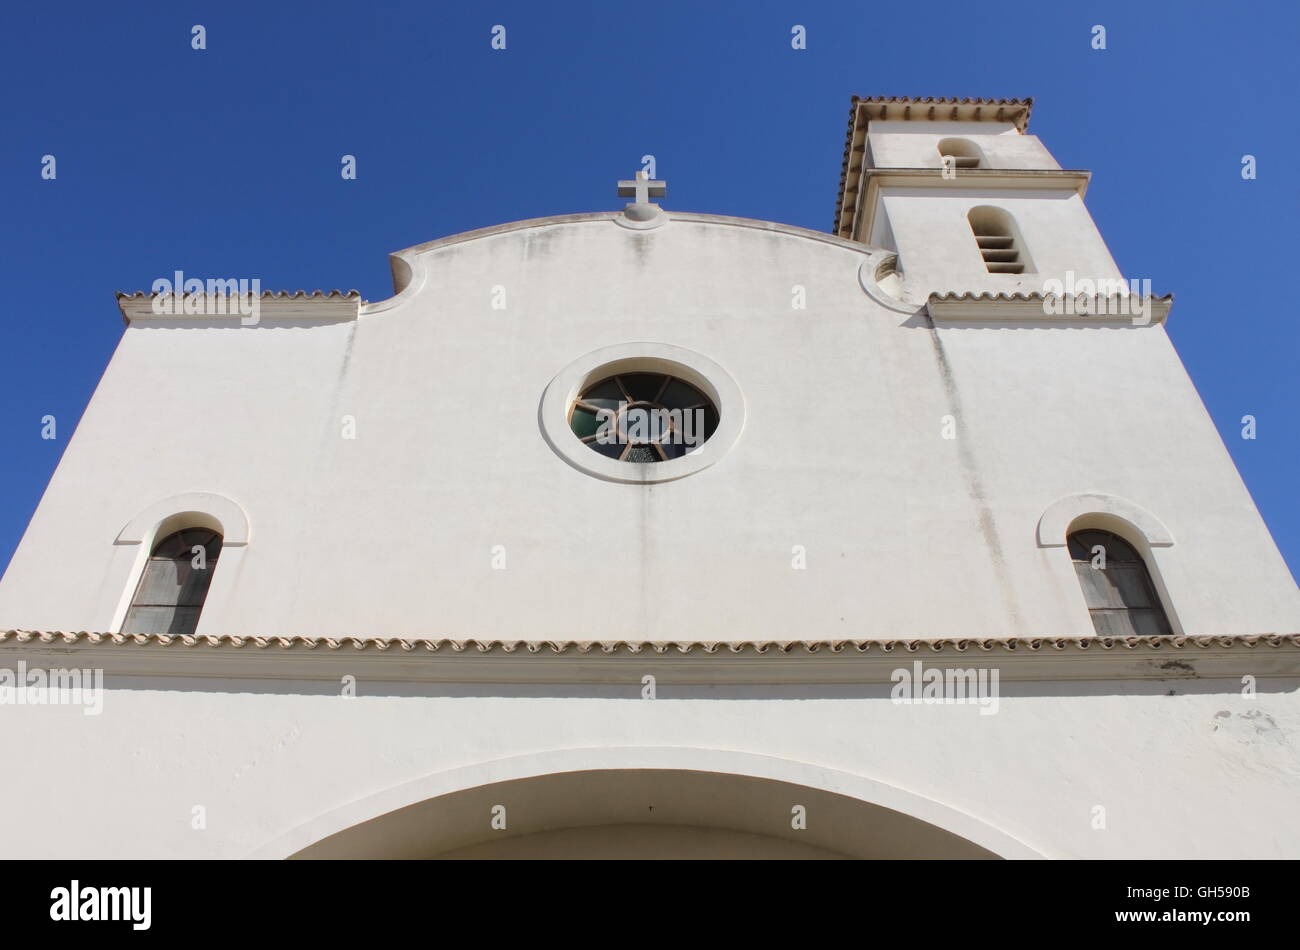 Facade of St. Telmo church in Ibiza island, Spain Stock Photo